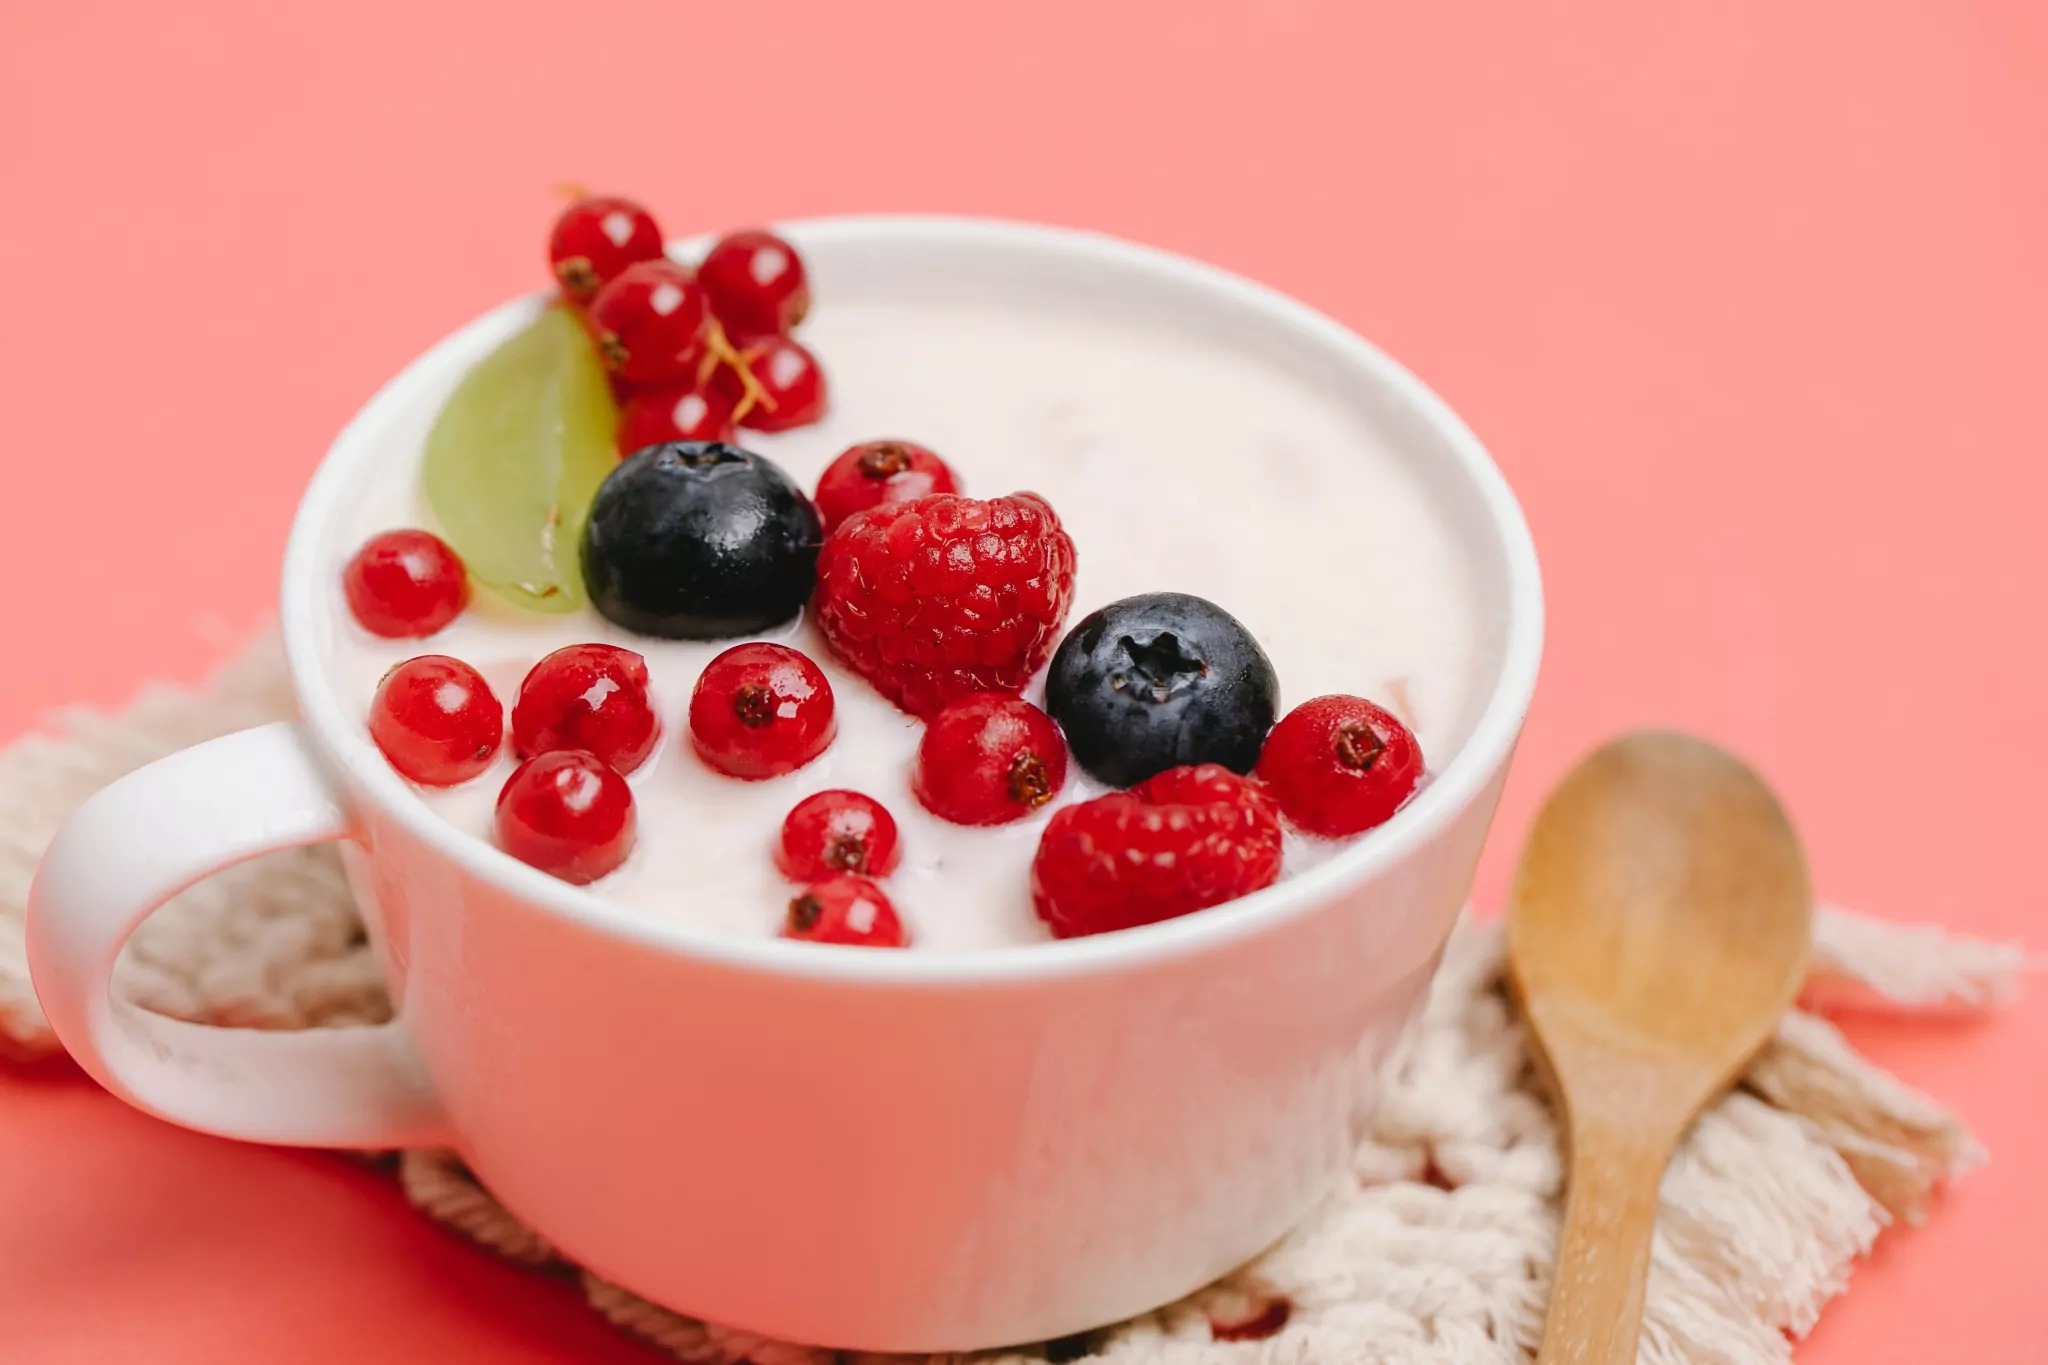 7 Surprising Uses for Yogurt